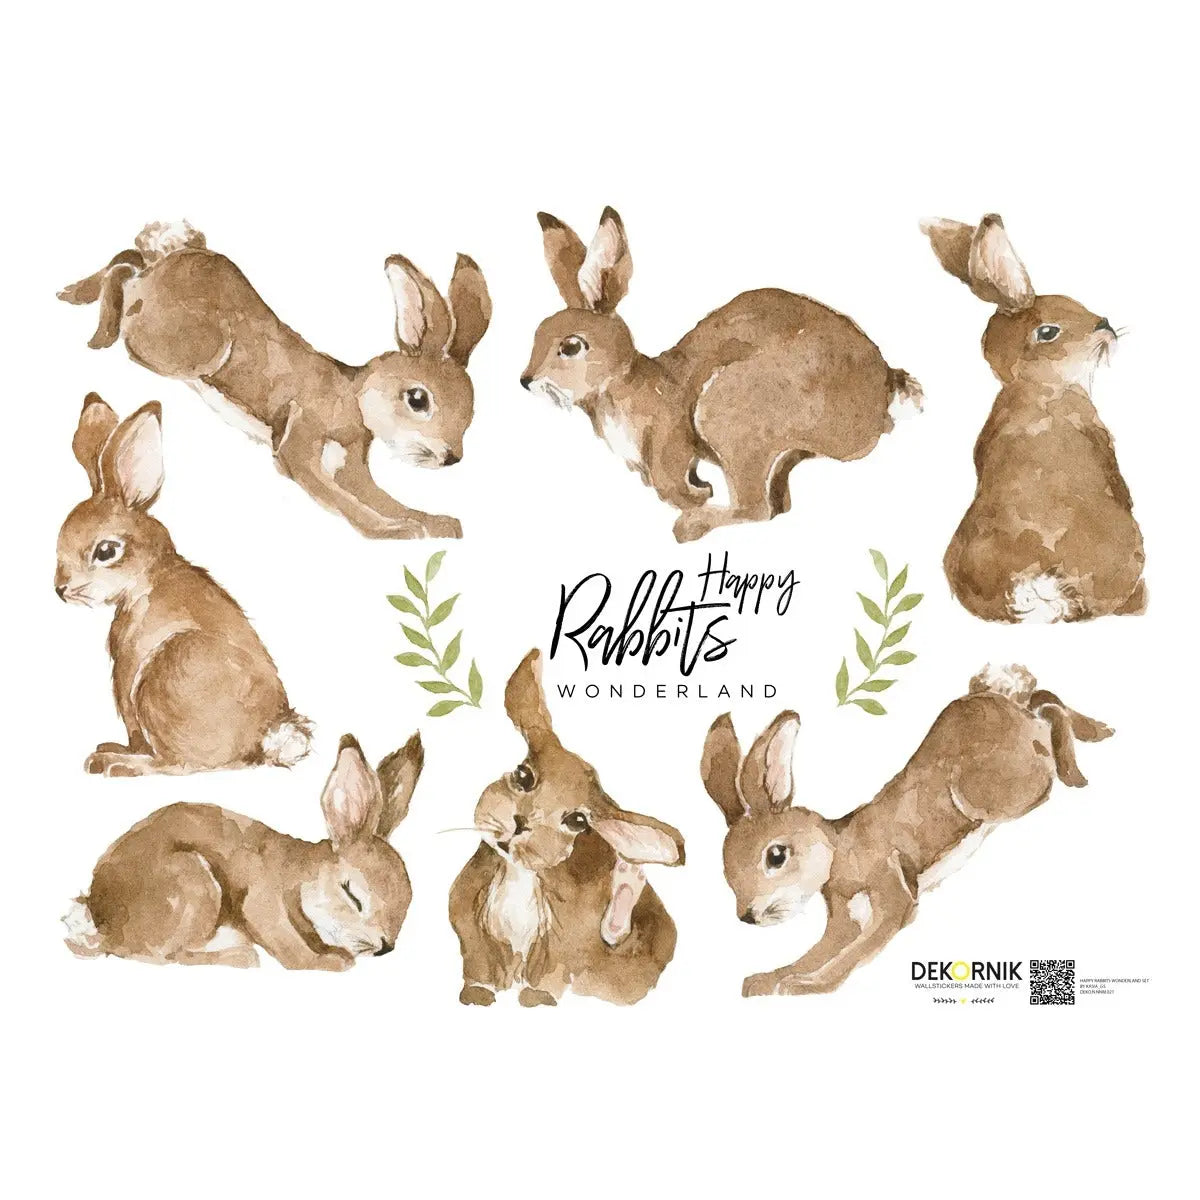 Stickers "happy rabbits wonderland"-Wallpapers & stickers-Dekornik-Blue Almonds-London-South Kensington